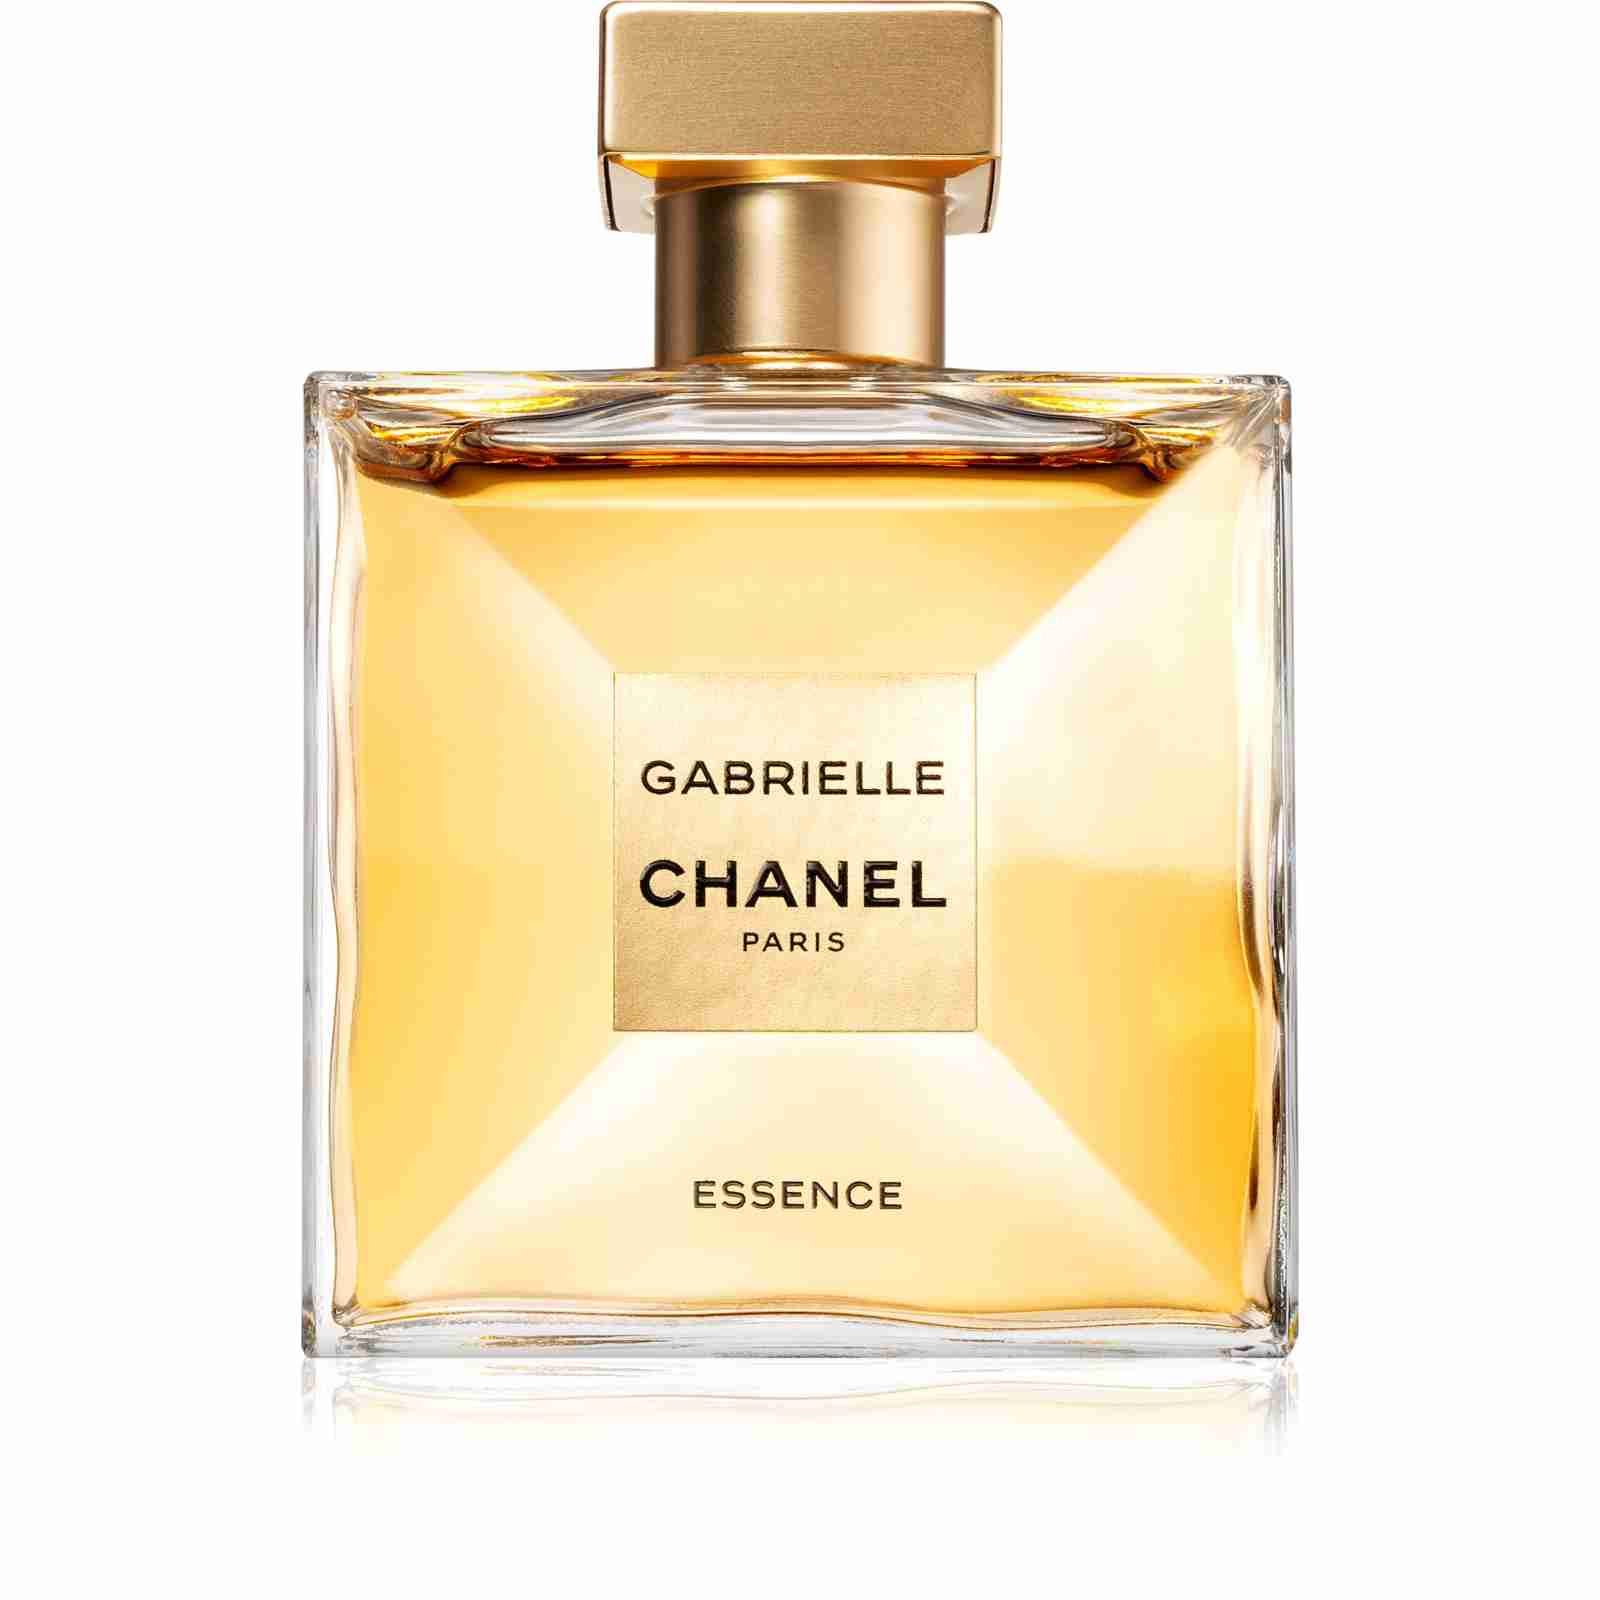 Шанель габриэль эссенс. Chanel Gabrielle Essence 50 ml. Chanel Gabrielle 100 мл. Chanel Gabrielle Essence EDP. Chanel Gabrielle (l) EDP 50ml.